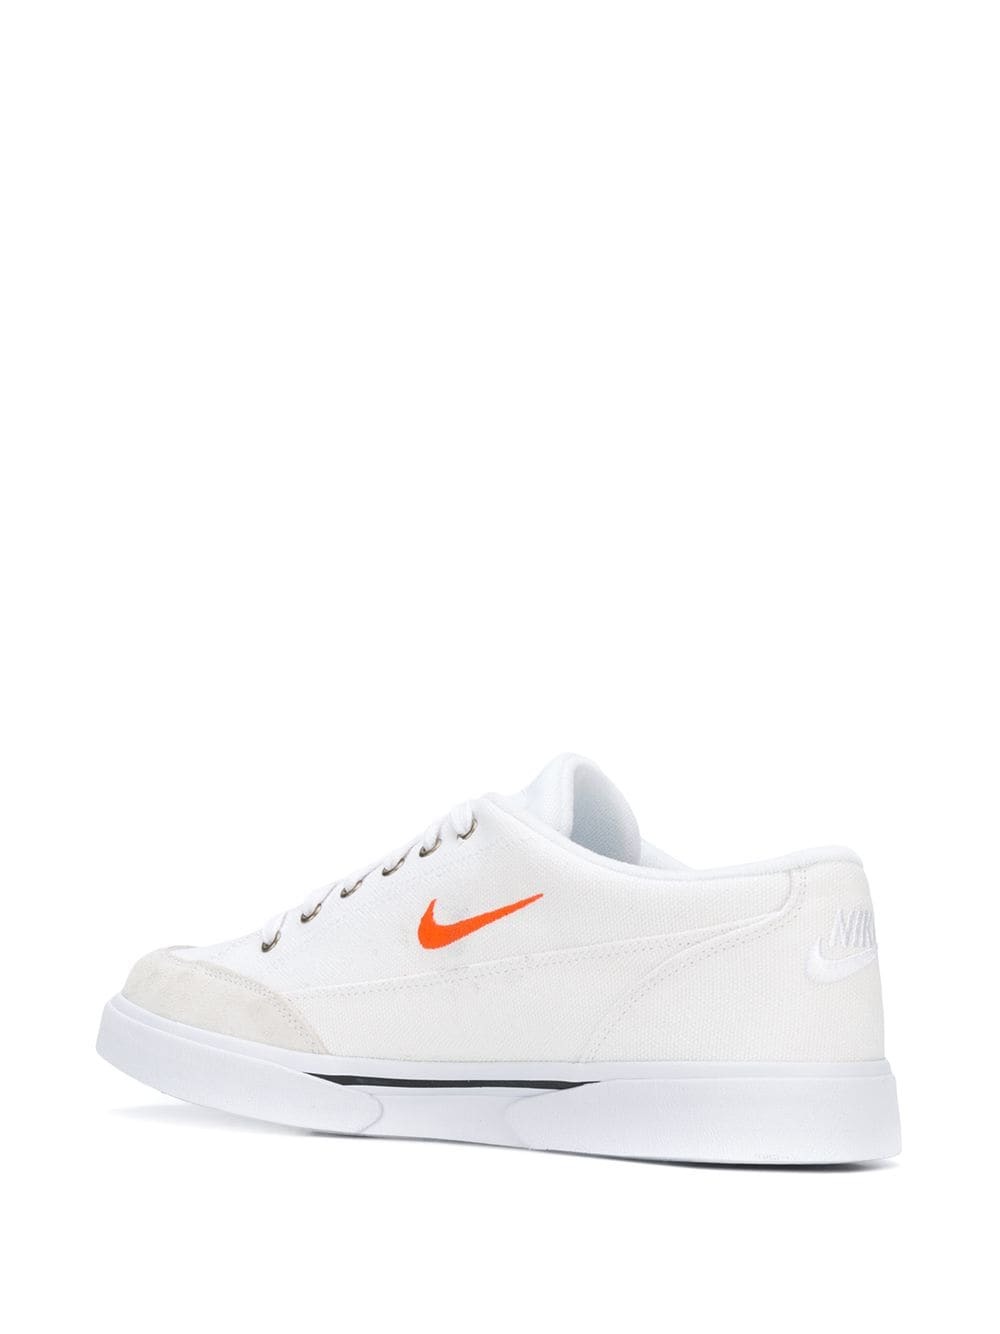 Hertog woordenboek Toneelschrijver Nike Gts 16 Txt Sneakers, $85 | farfetch.com | Lookastic